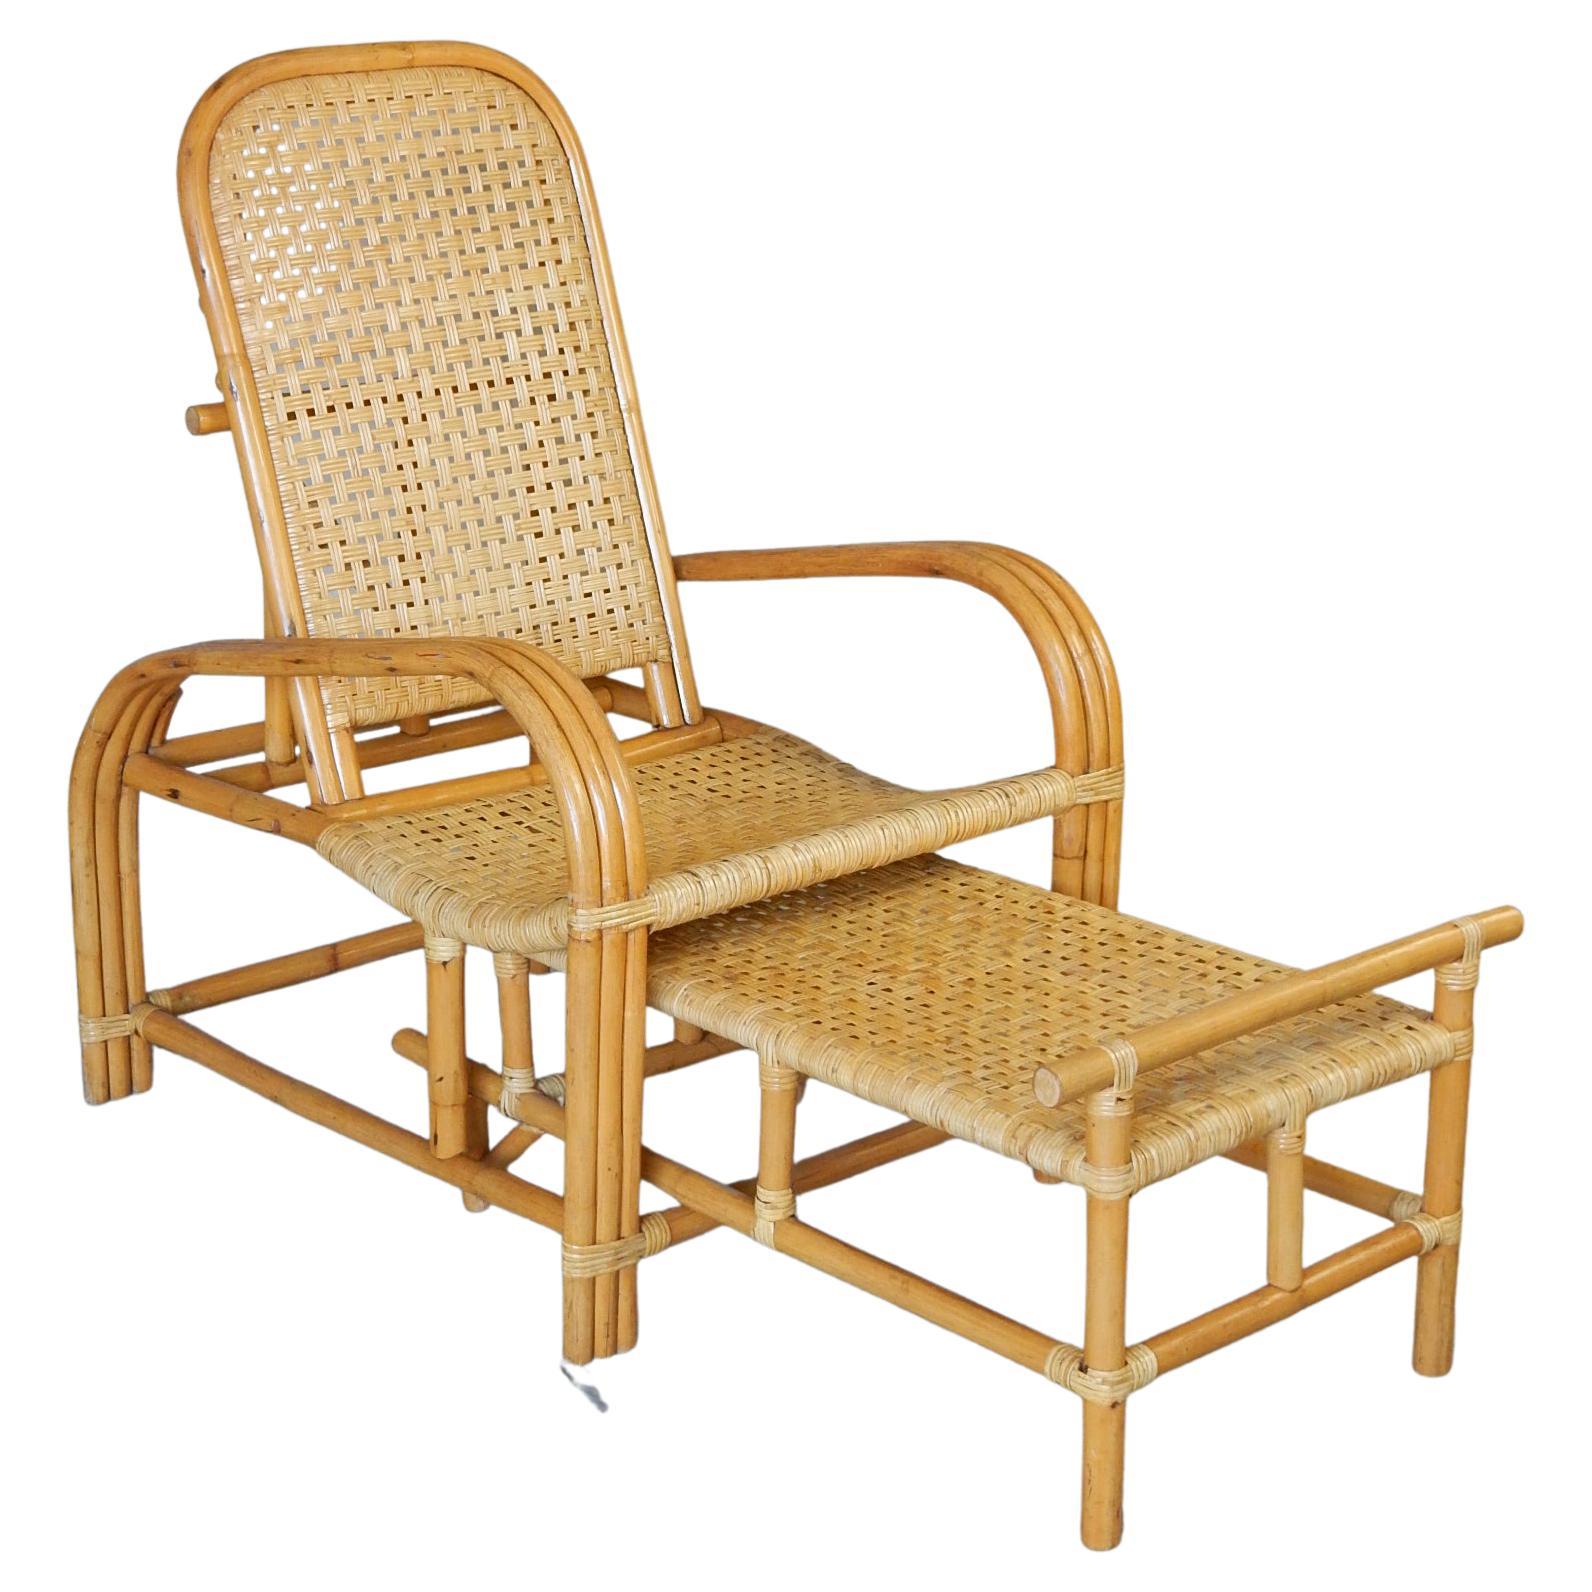 1950's Rattan & Woven Cane Chaise Lounge Chair Paul Laszlo Style For Sale